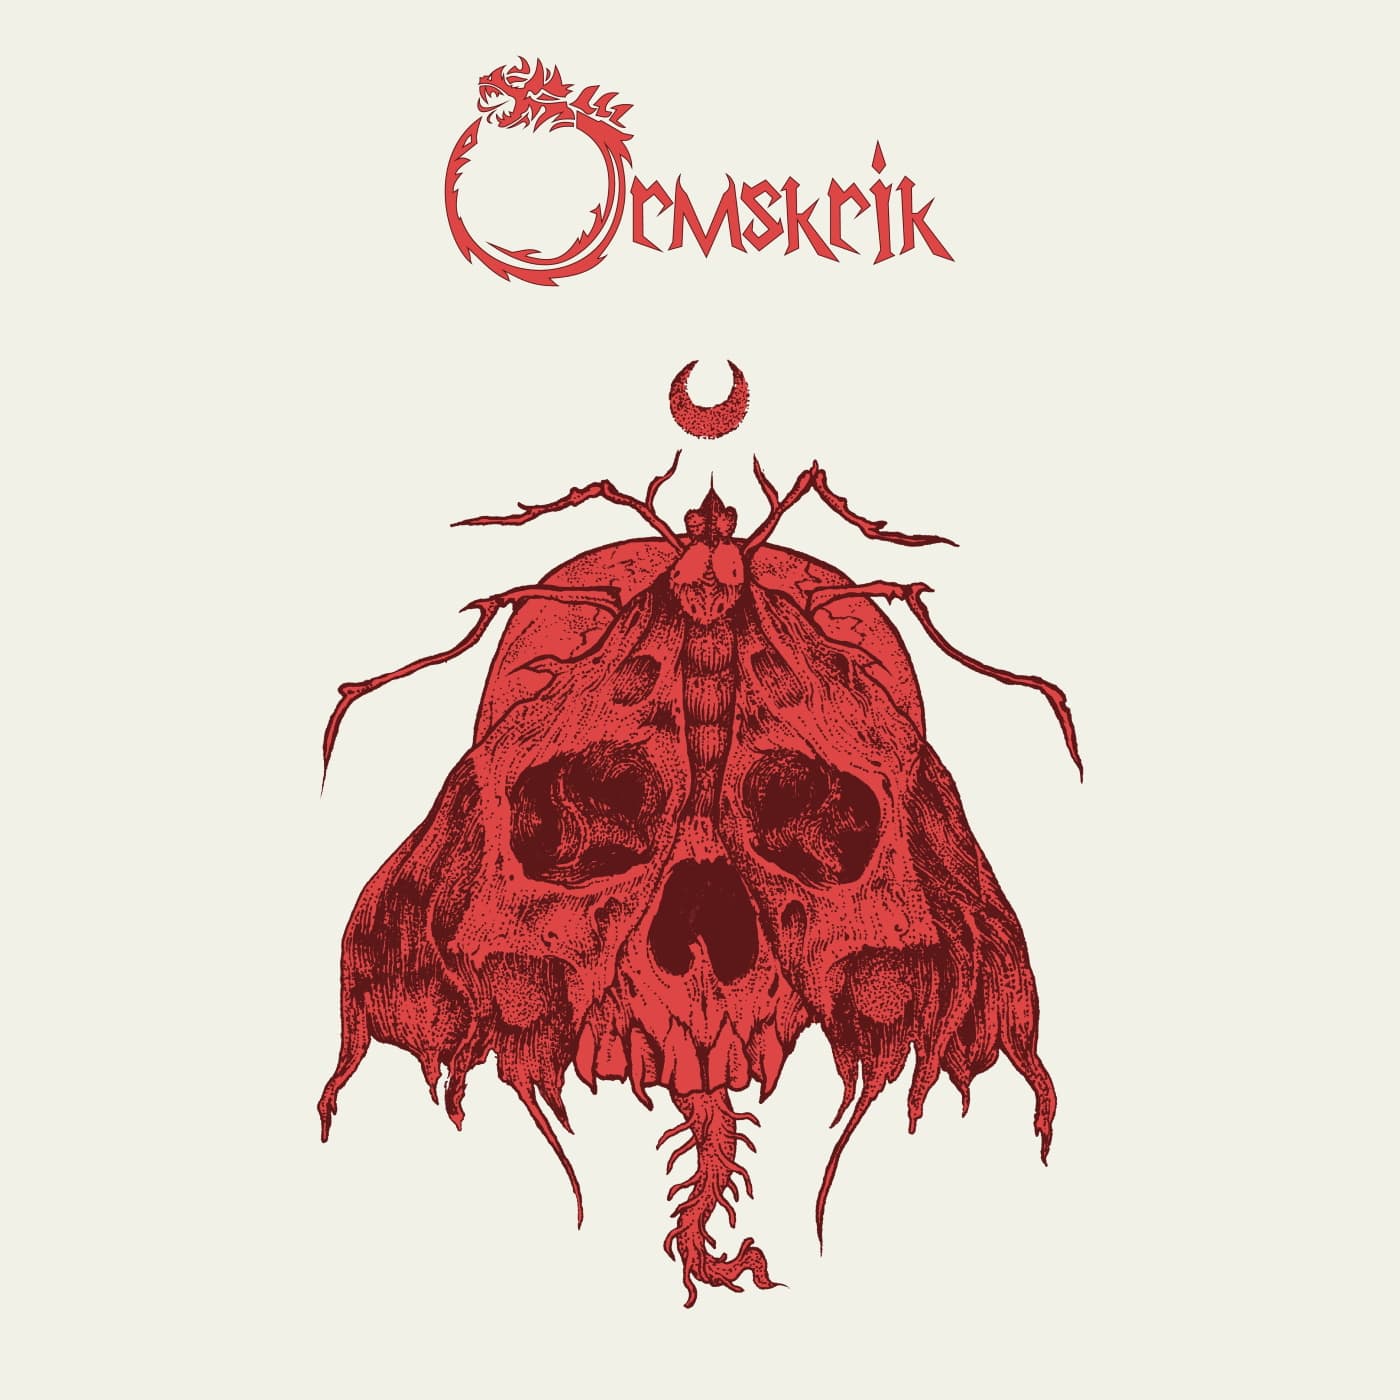 Ormskrik cover by Rotten Fantom